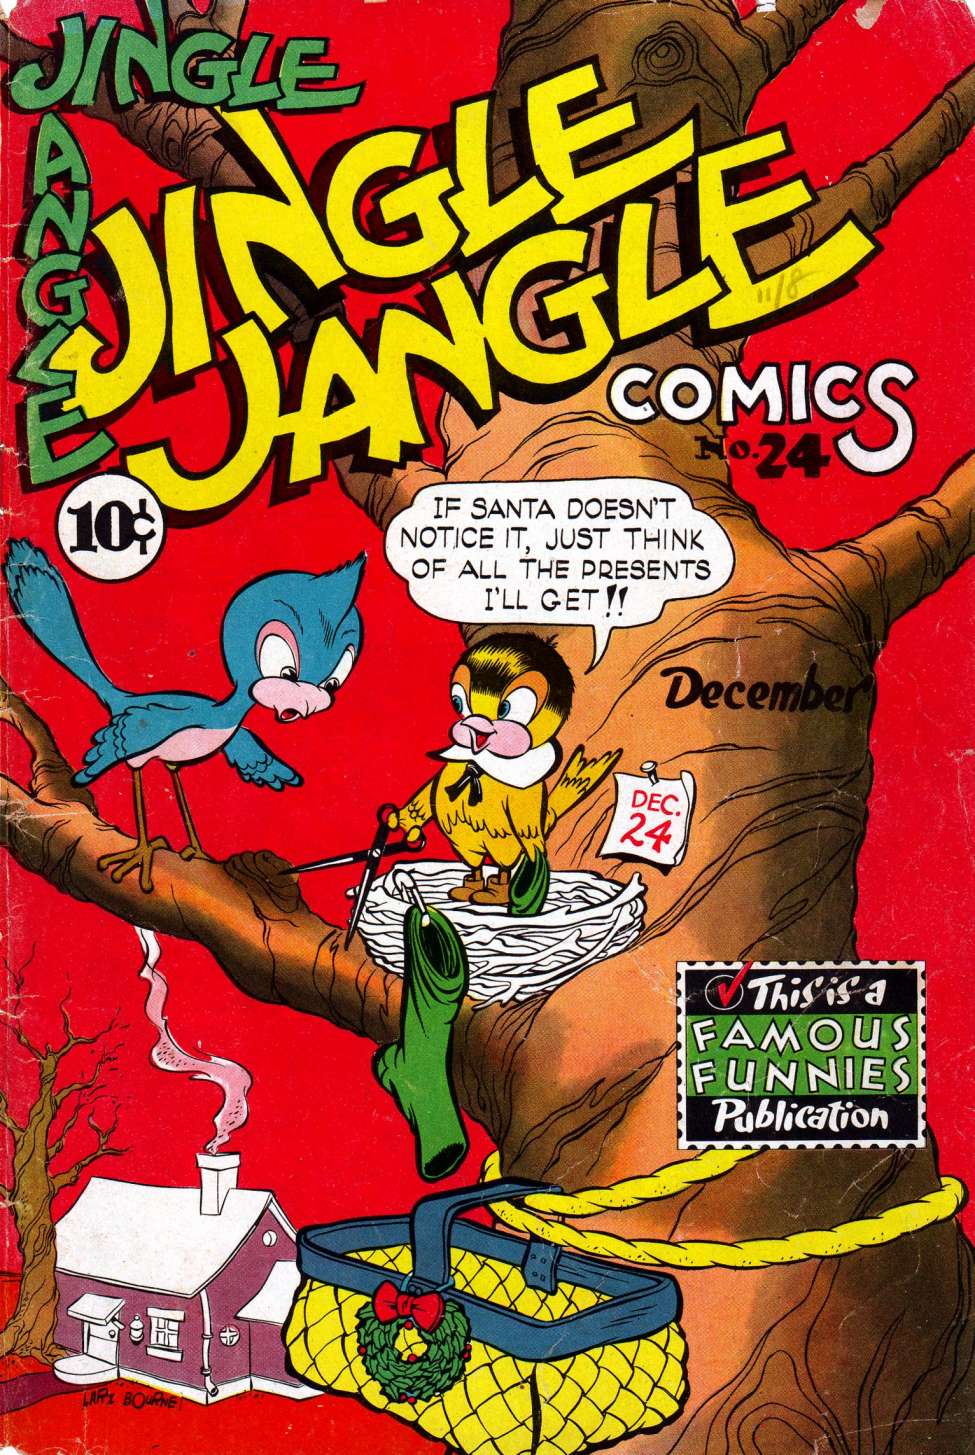 Comic Book Cover For Jingle Jangle Comics 24